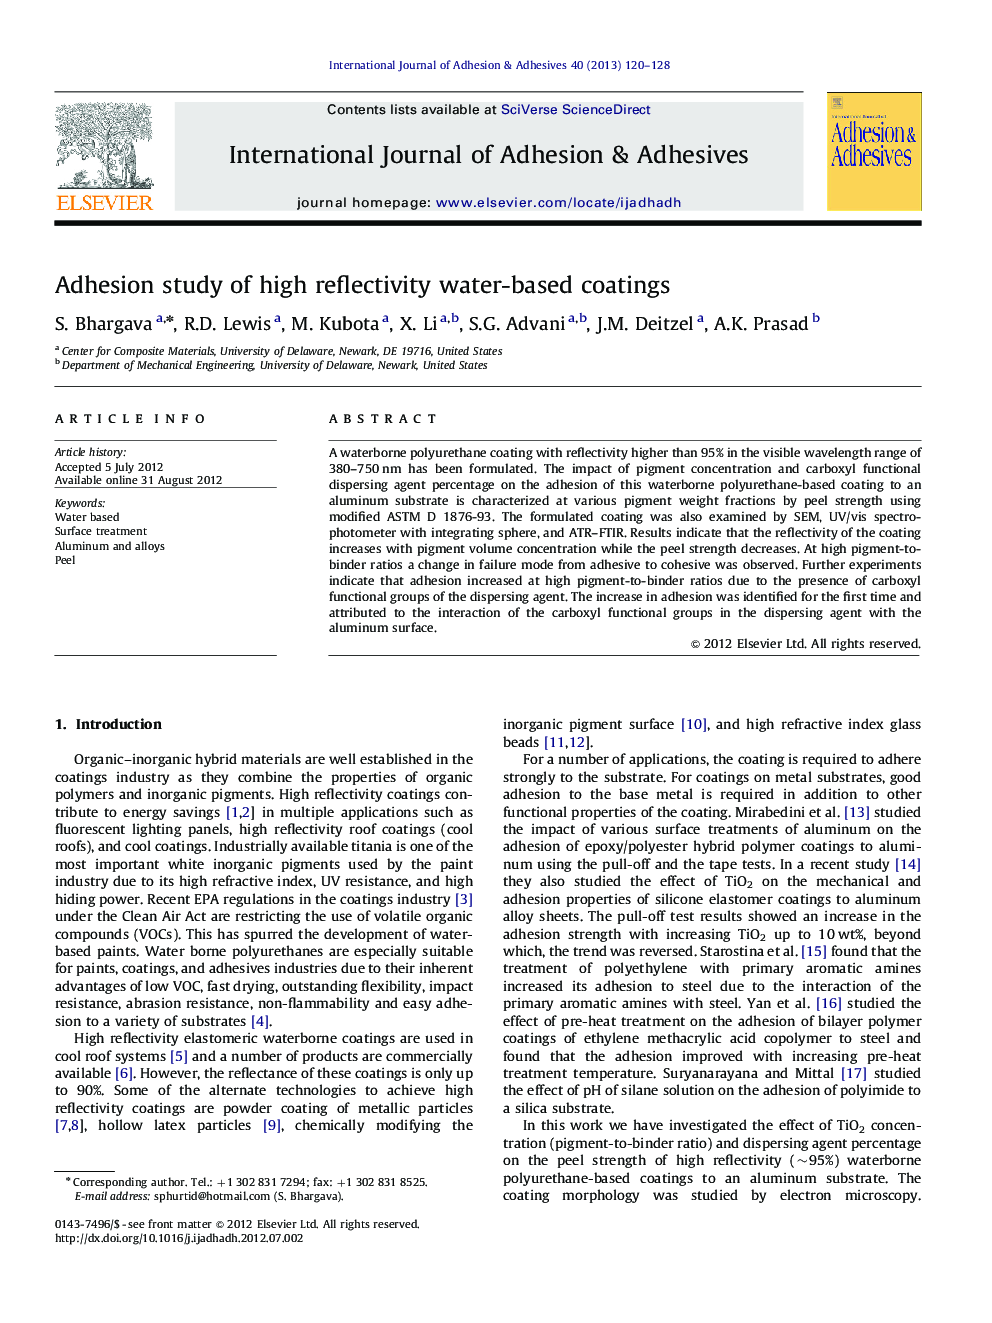 Adhesion study of high reflectivity water-based coatings